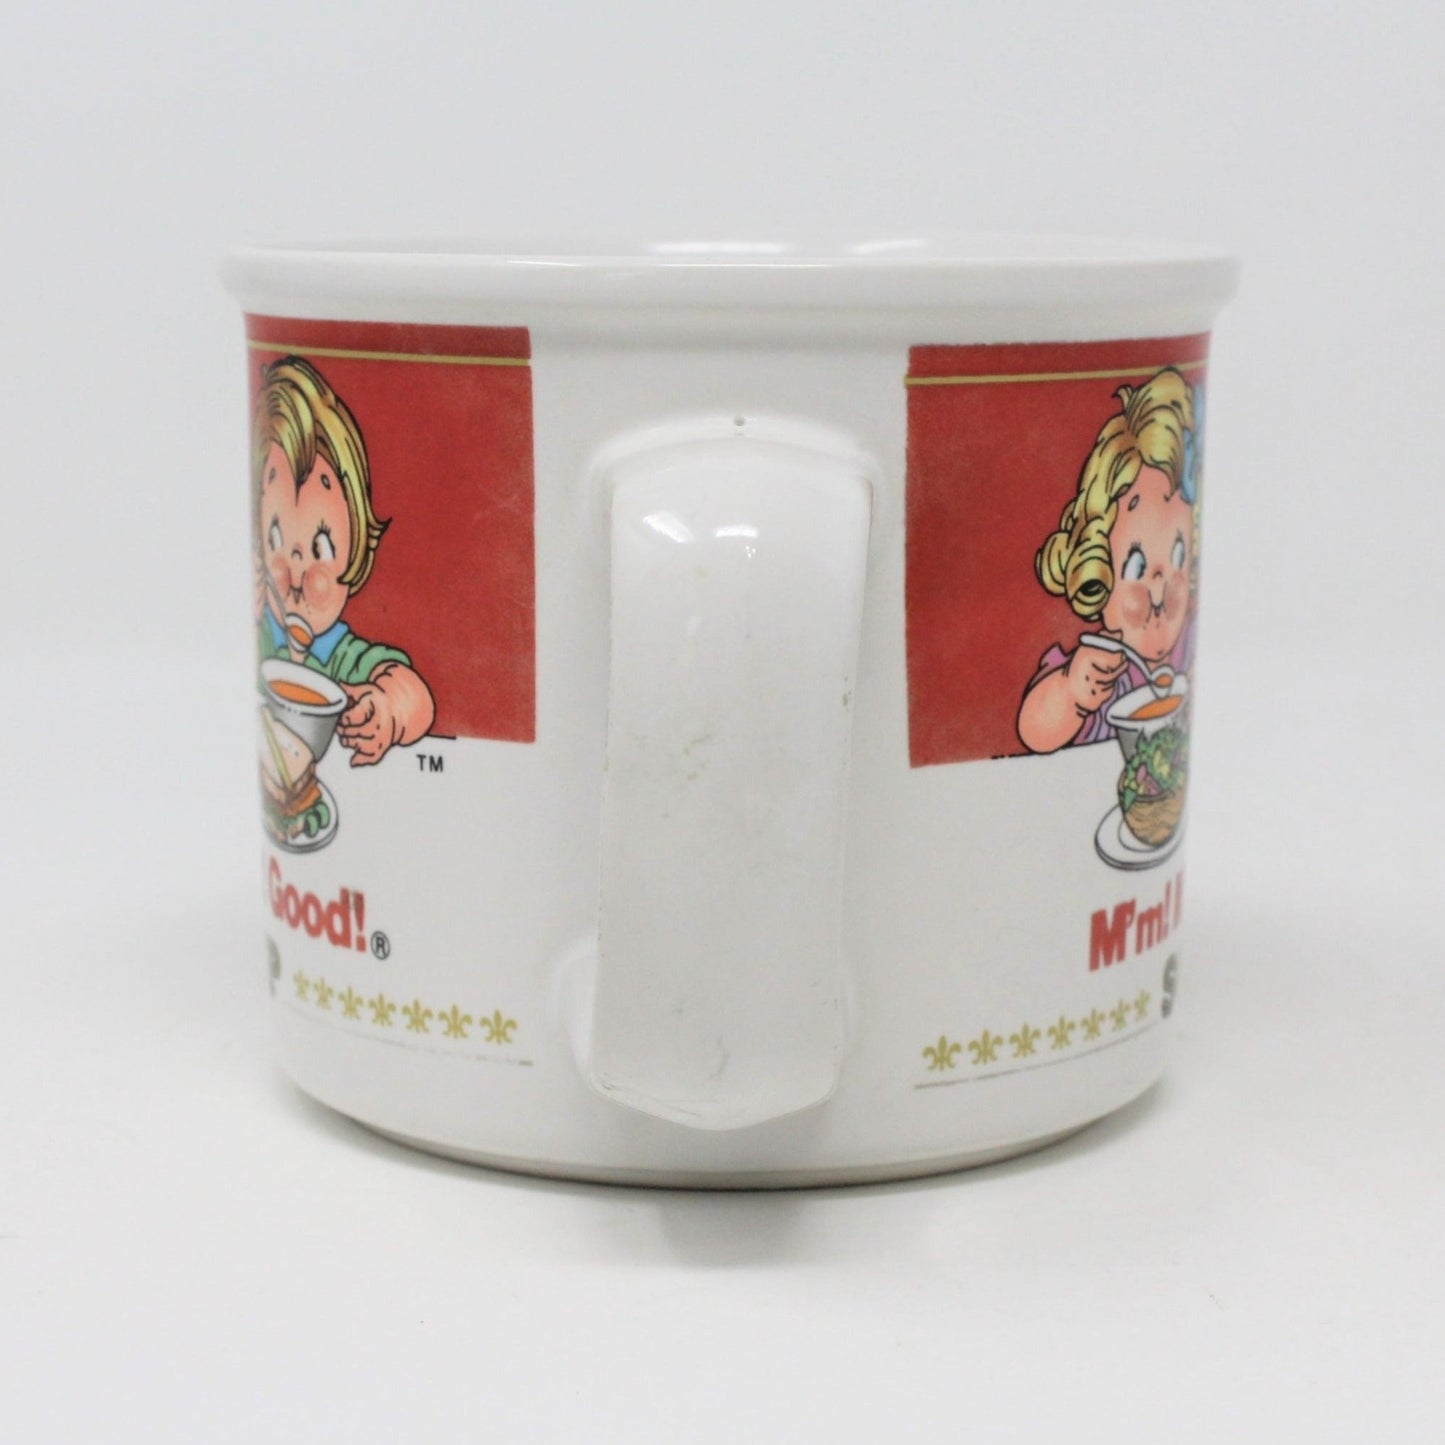 Soup Mug, Campbell's Kids, M'm! Good!, Westwood, Ceramic, 1993